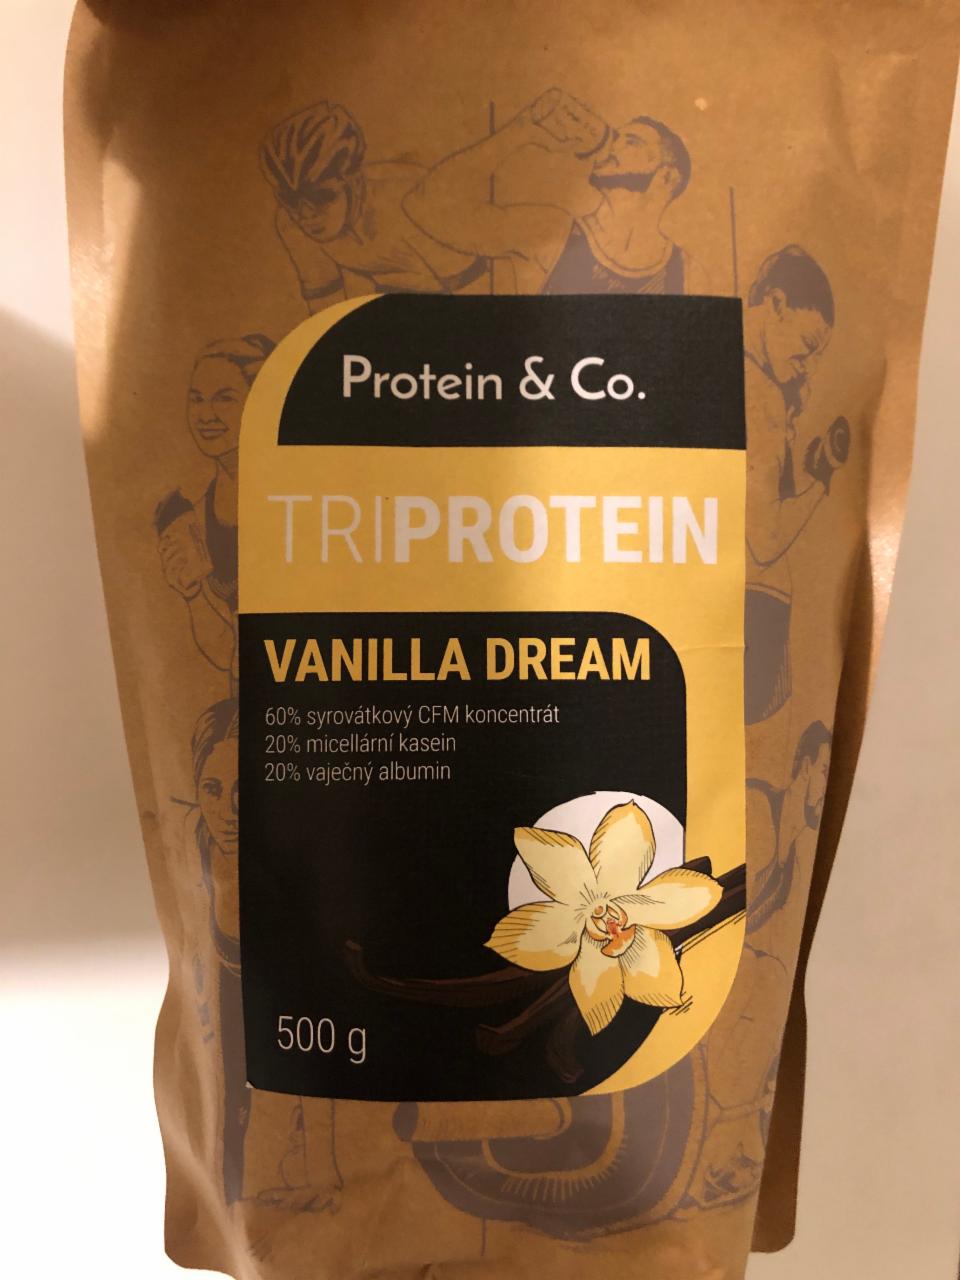 Fotografie - Triprotein Vanilla dream Protein & Co.